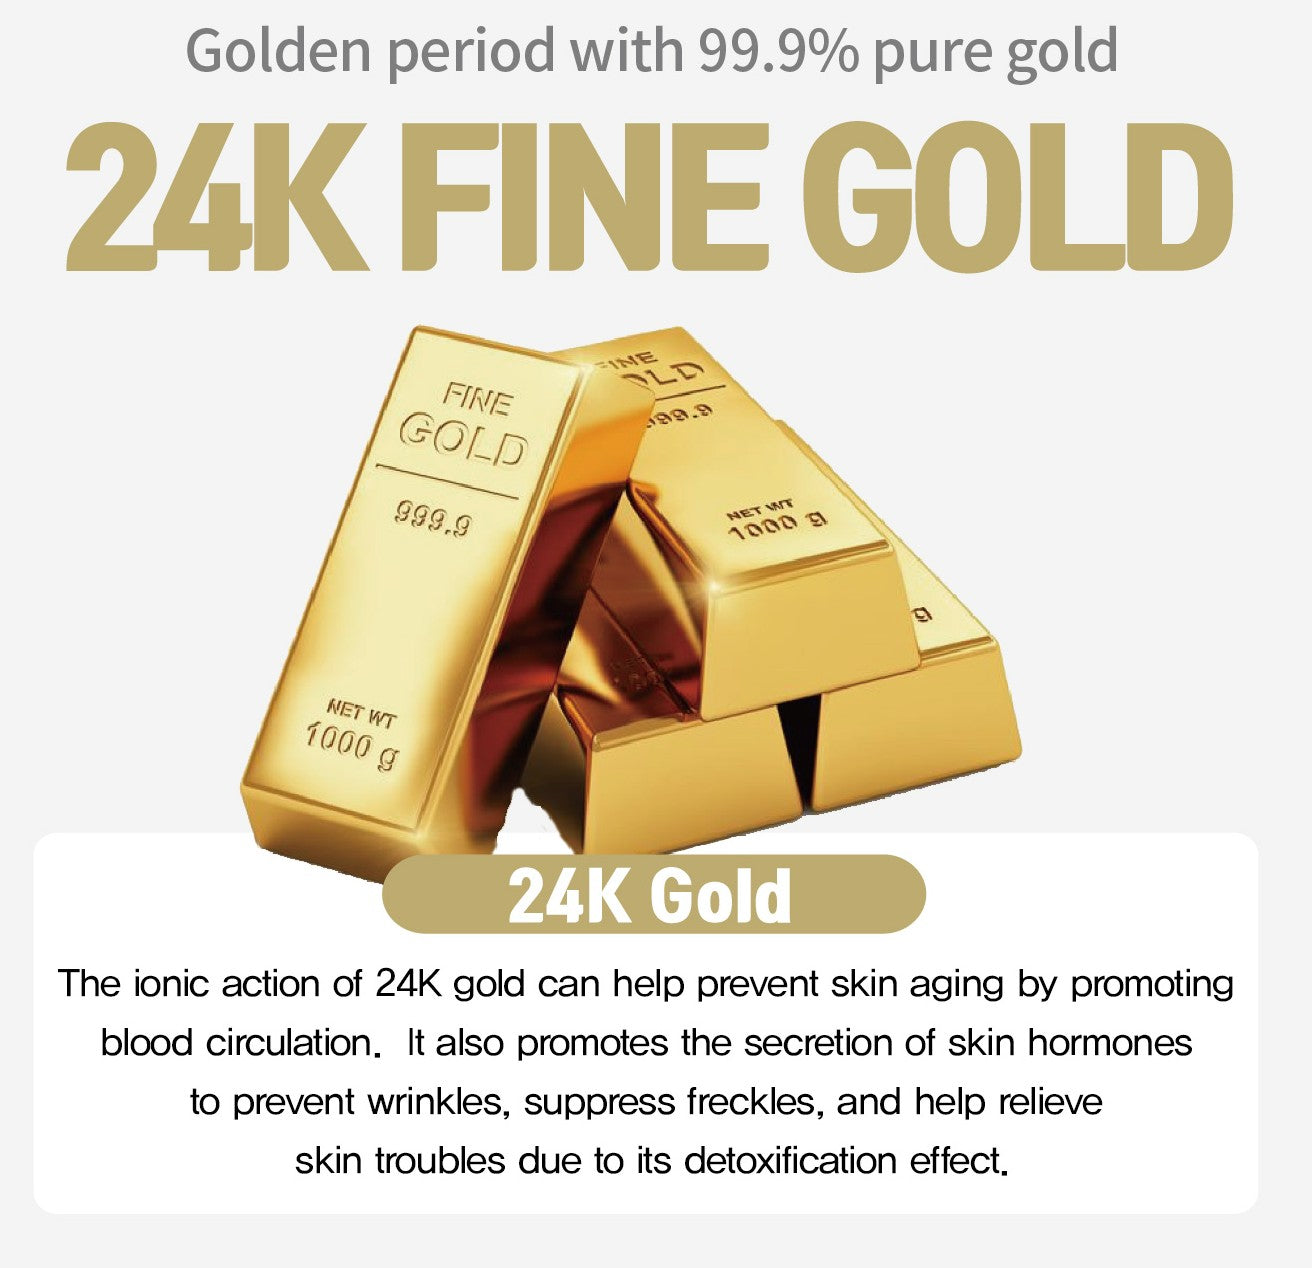 ANJO LAYDAY 24K Luxury Gold 6 Set Facial Skincare Anti Aging Moisture Wrinkles